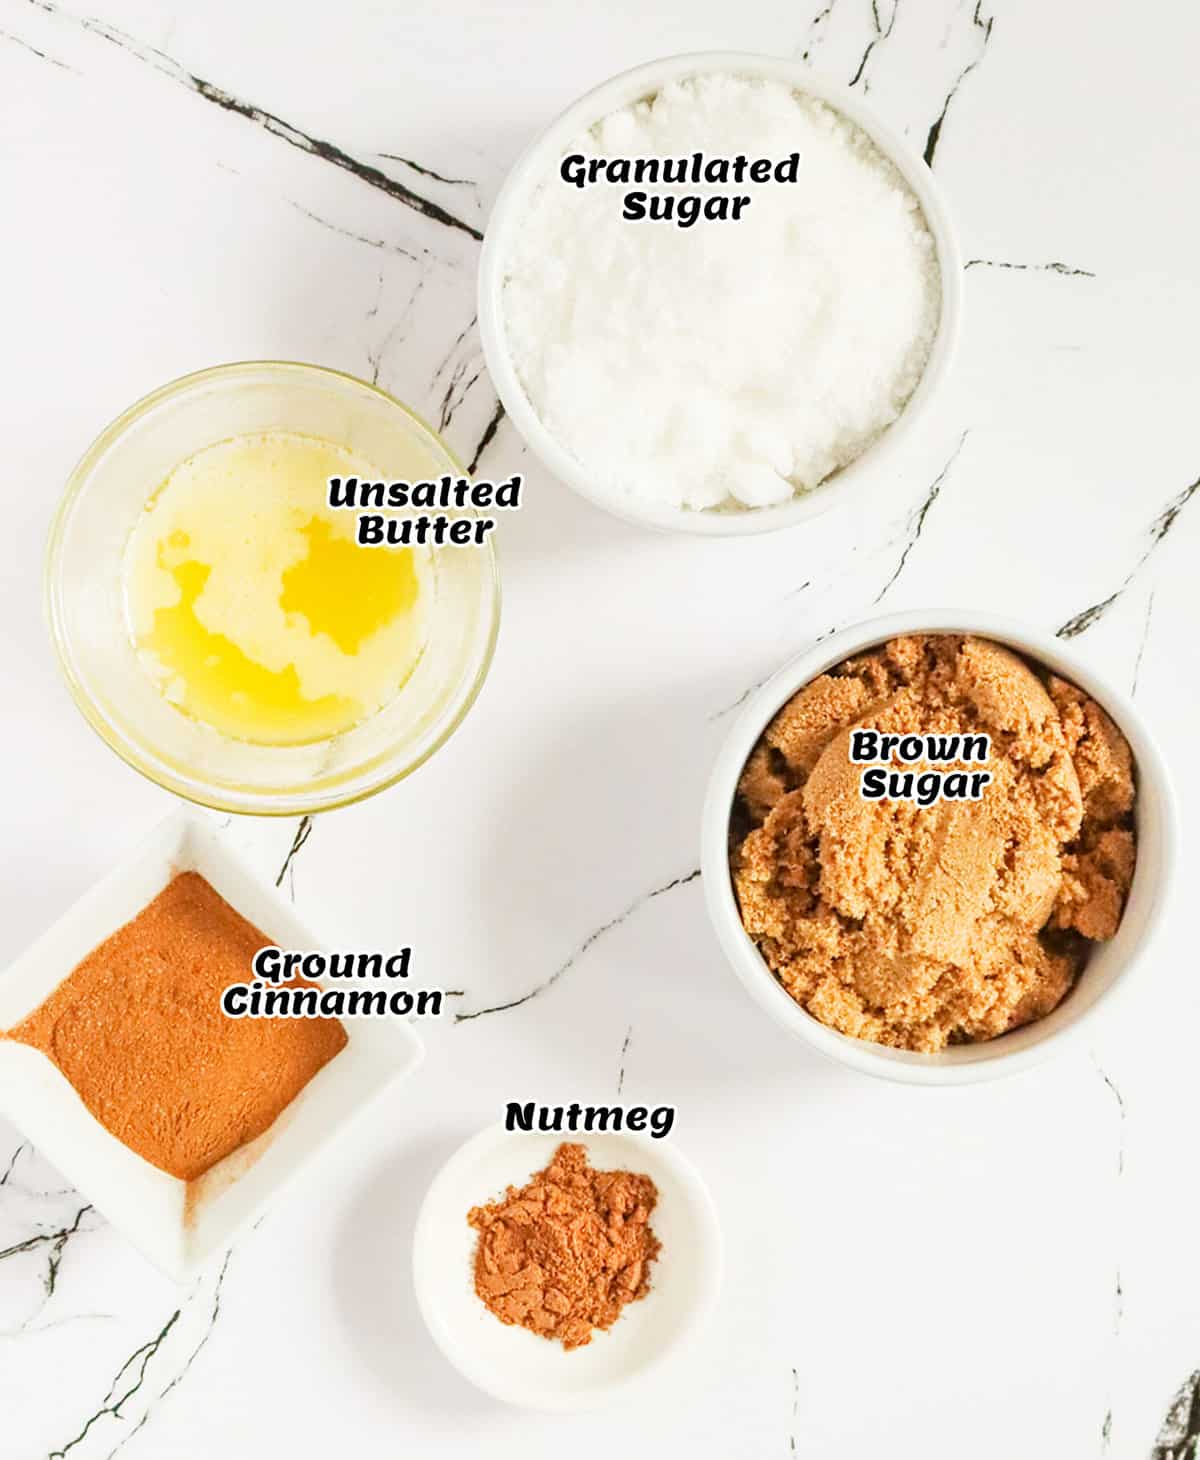 What you need to make the cinnamon sugar